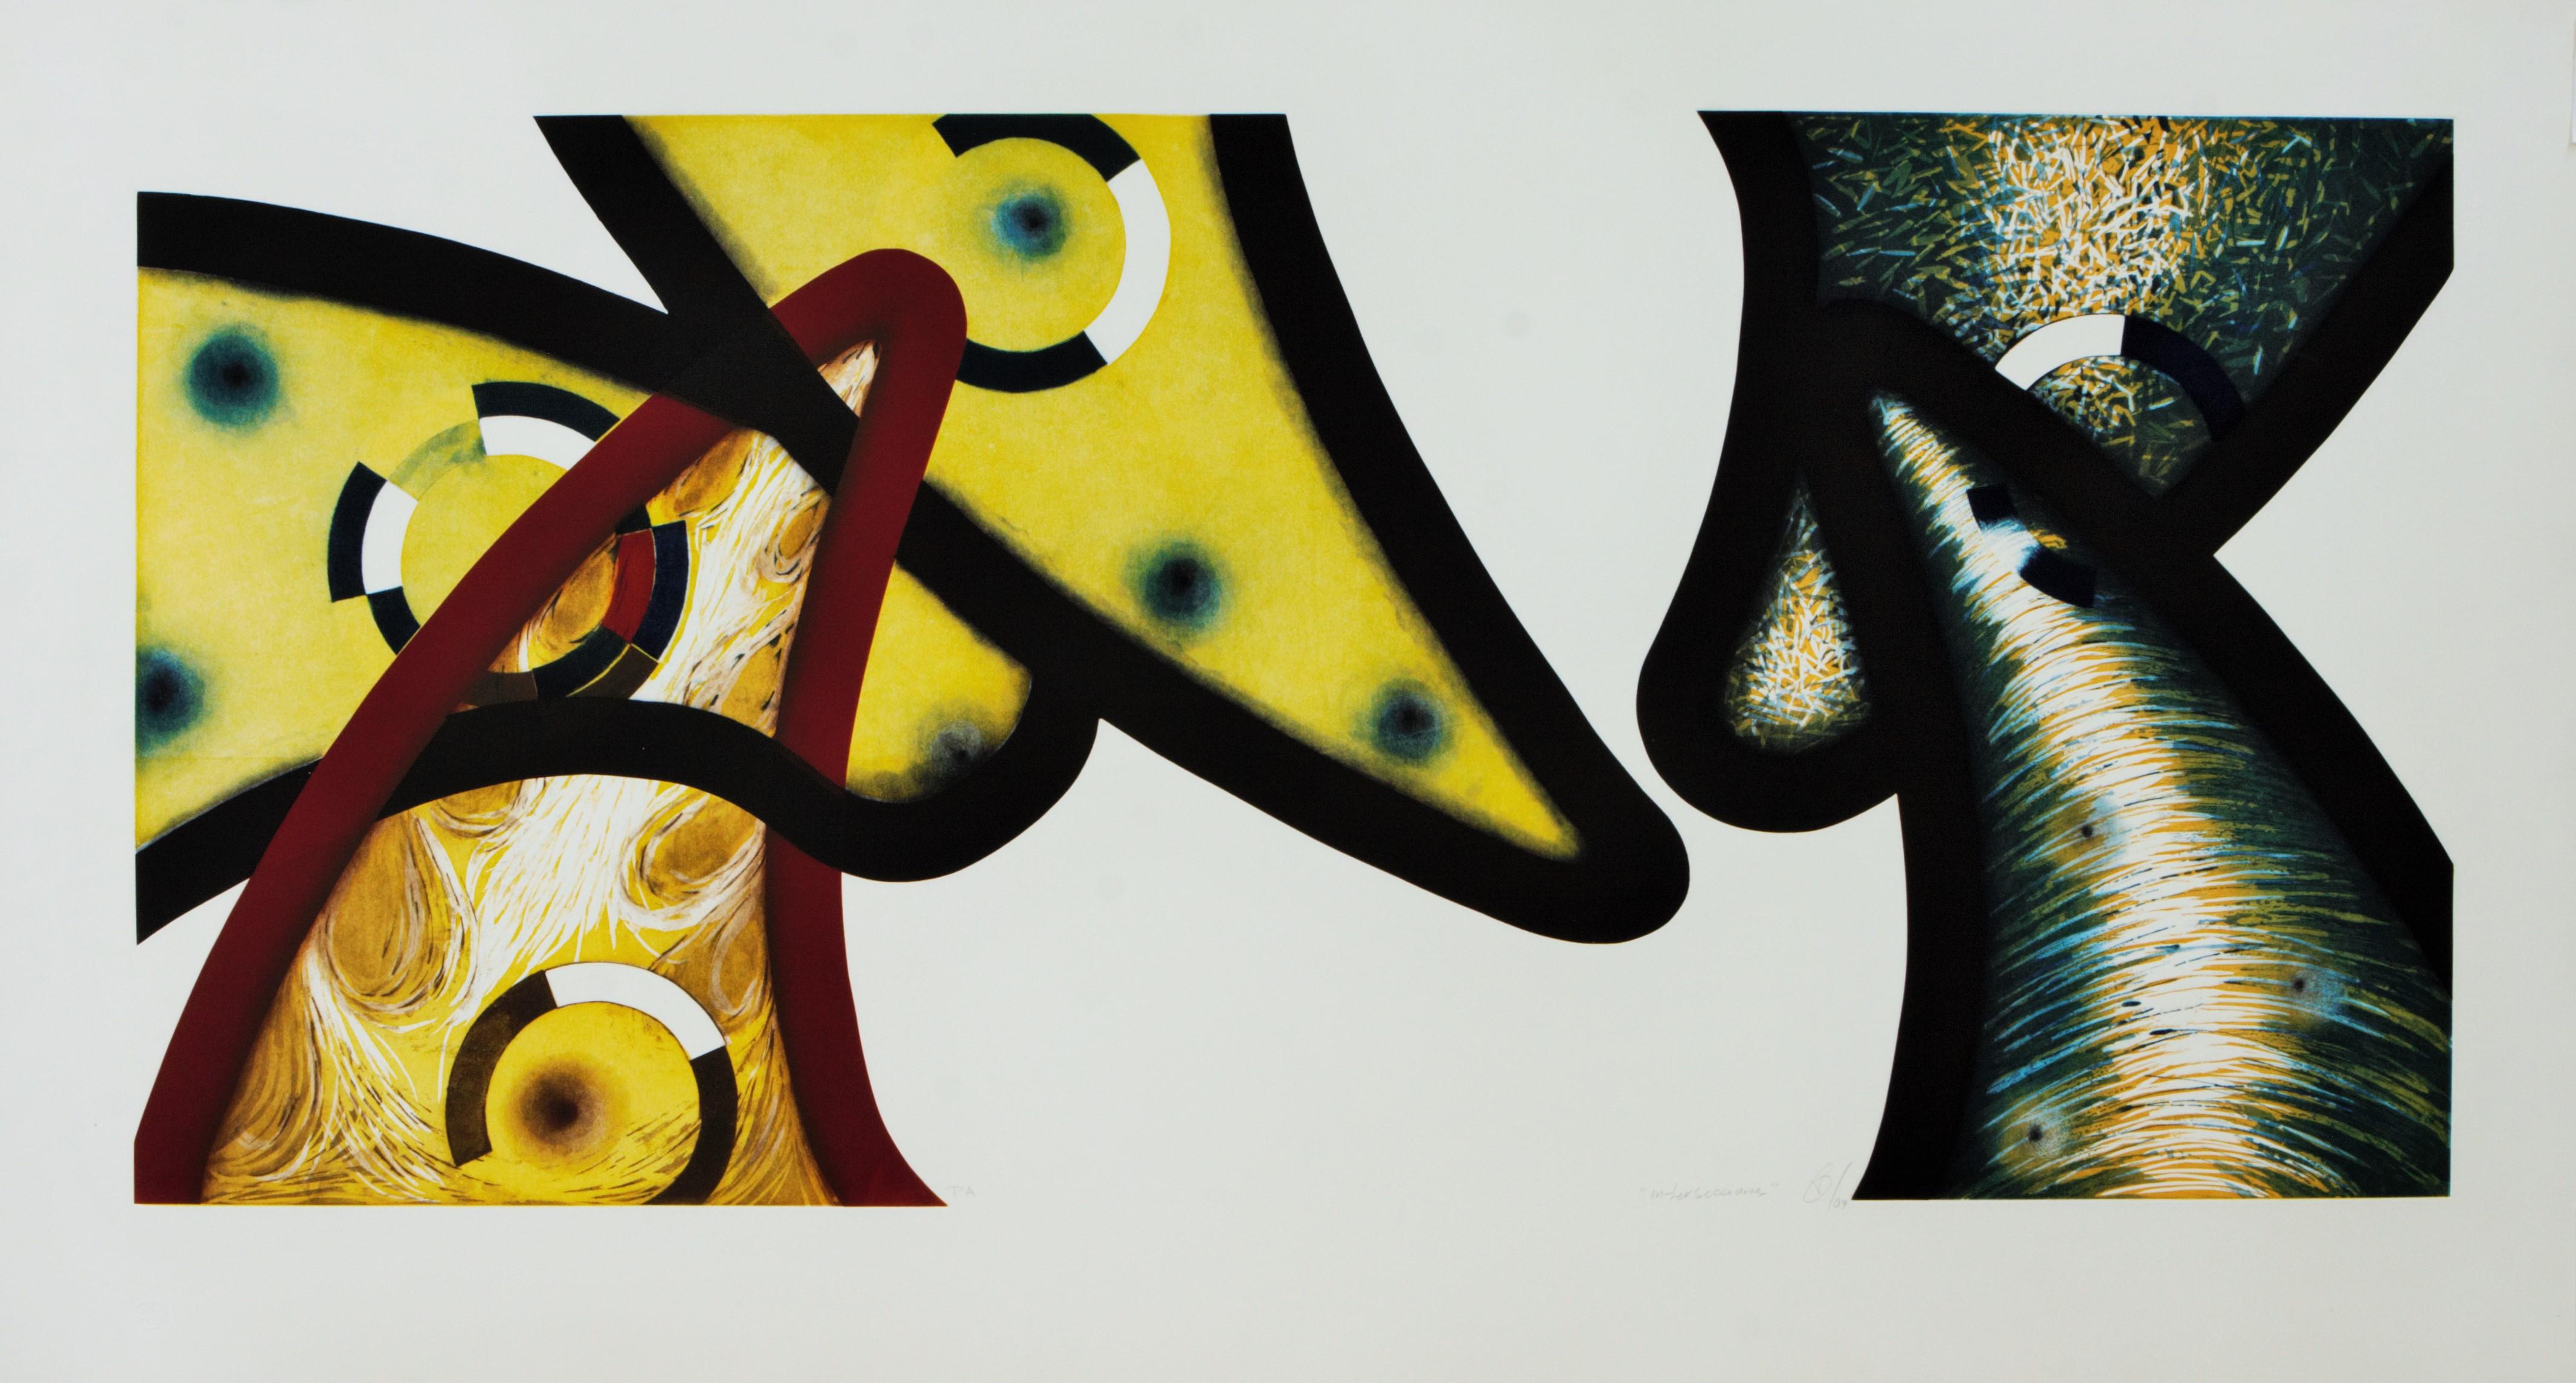 Victor Guadalajara (Mexican, 1965)
'Intersecciones', 2009
Woodcut and Aquatint
100.00 x 185 cm. (39.4 x 72.8 in.)
Edition of 30
Unframed